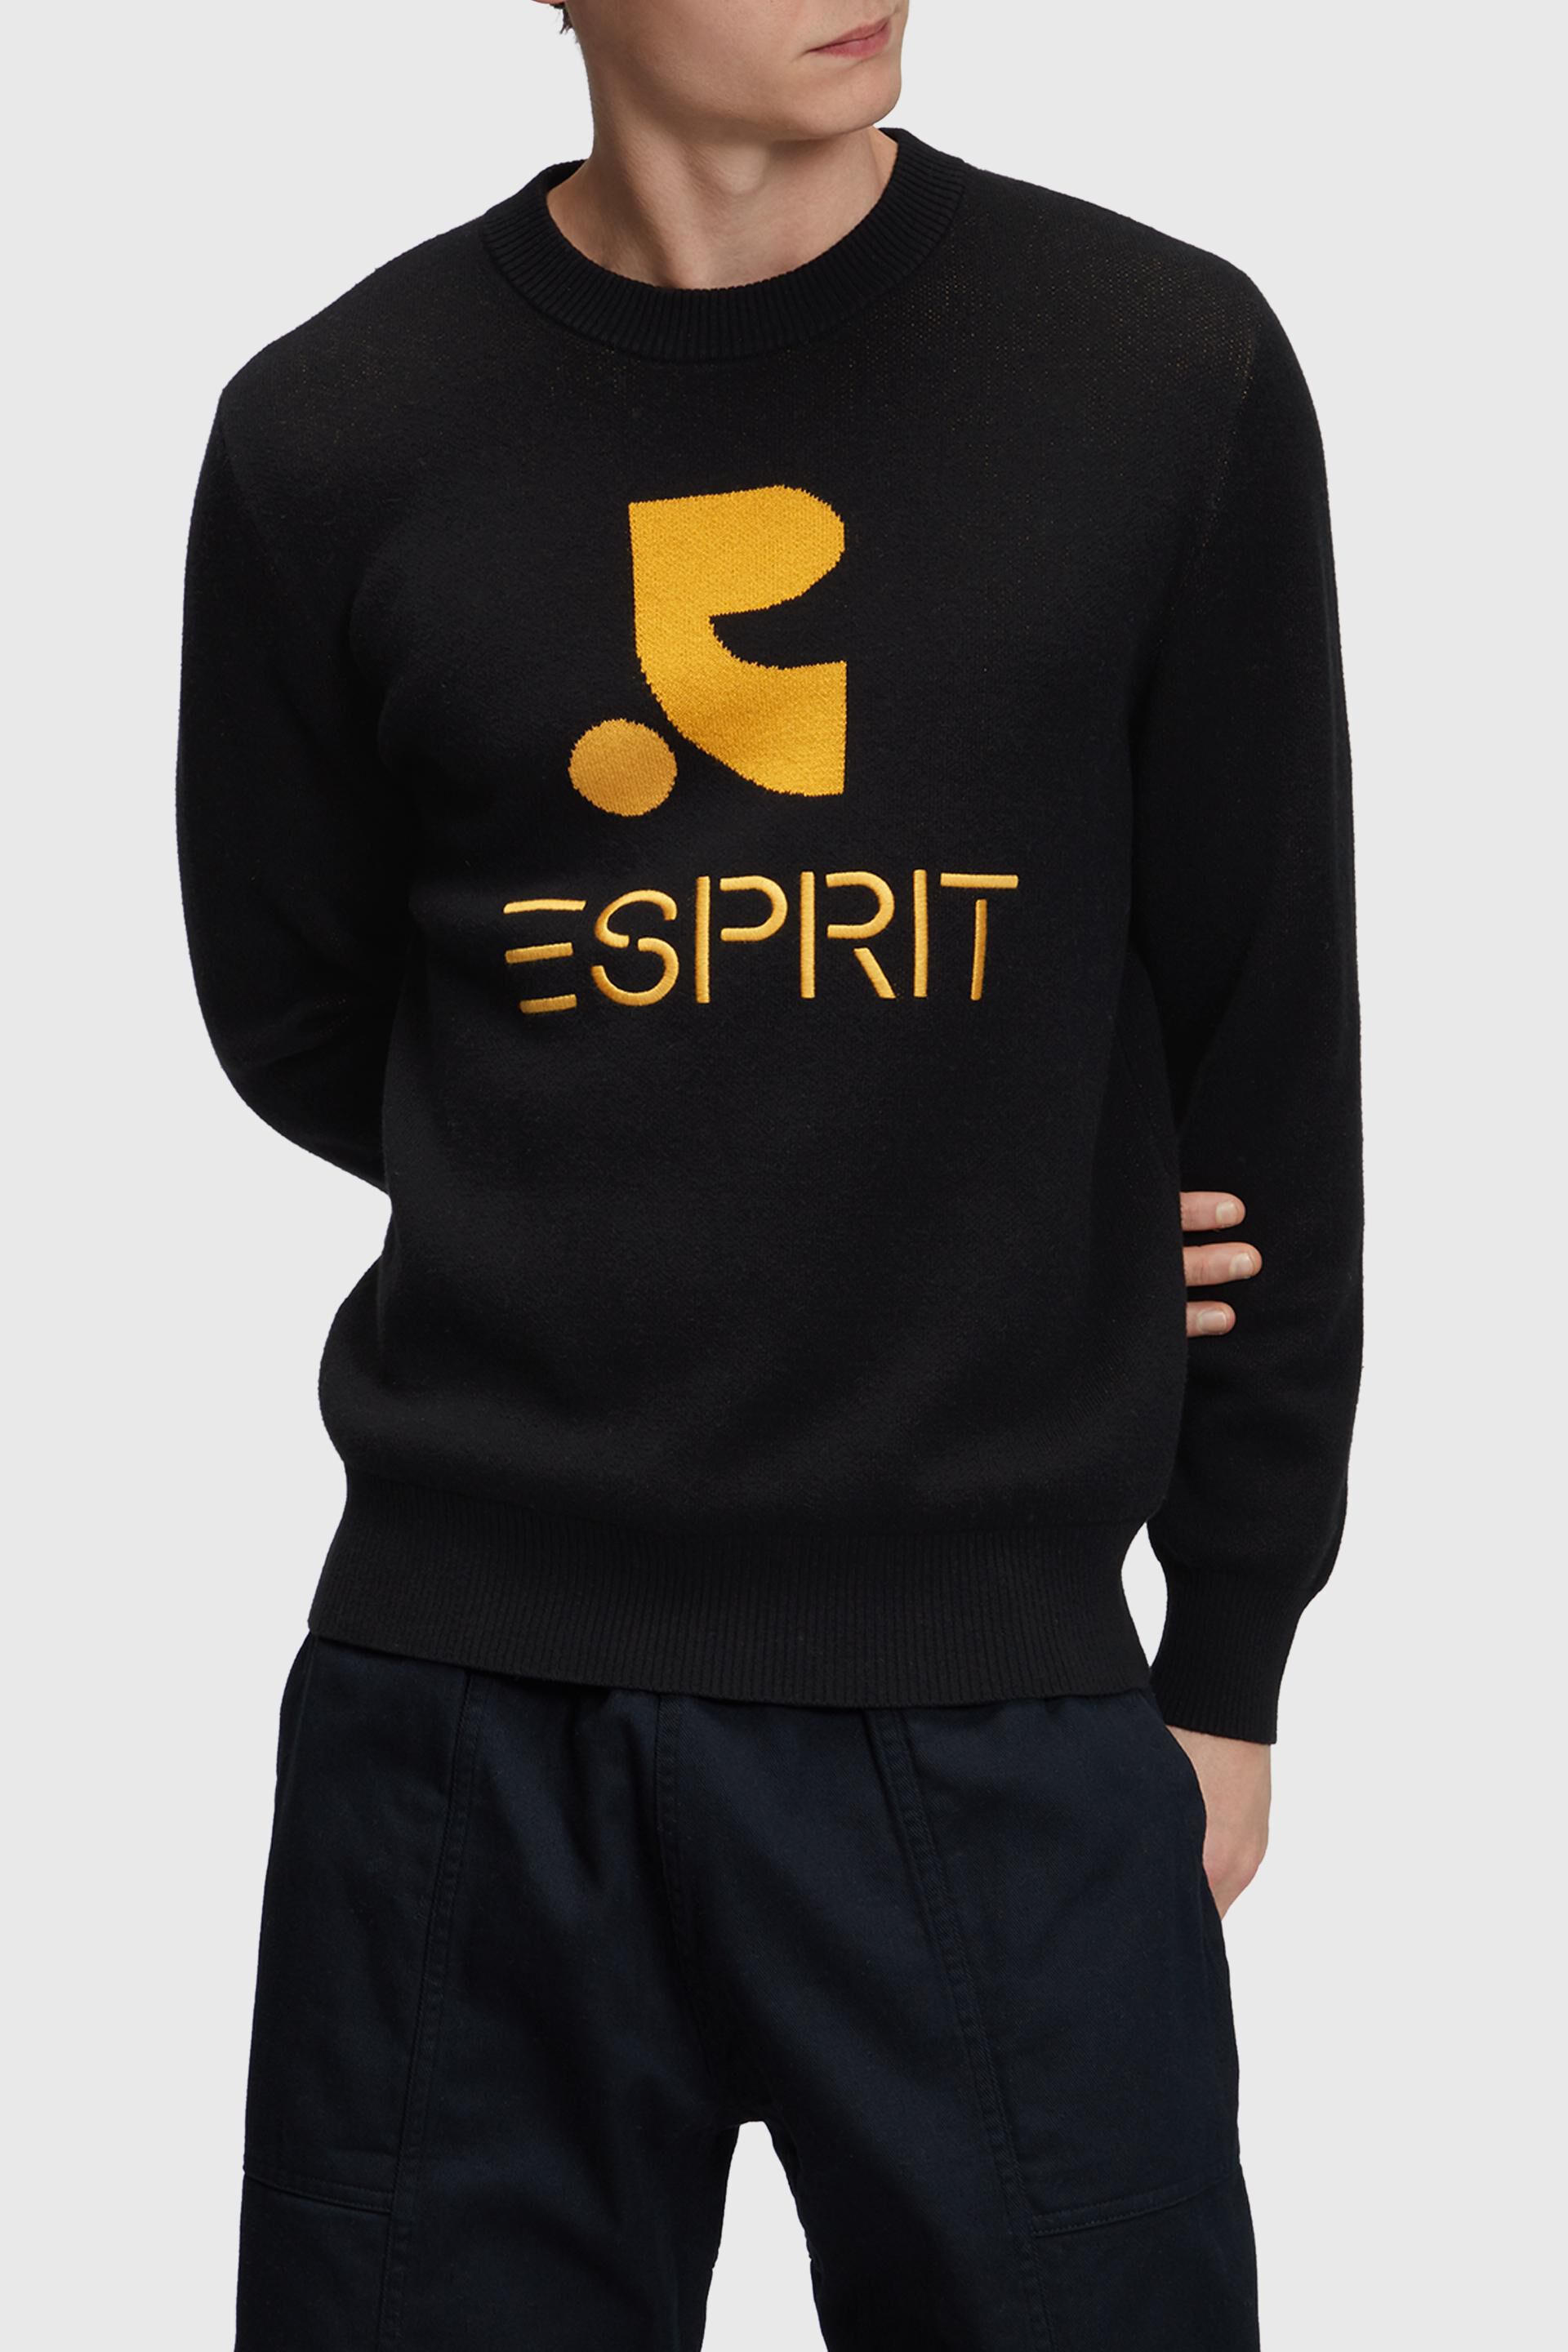 Esprit jumper with cashmere Crewneck